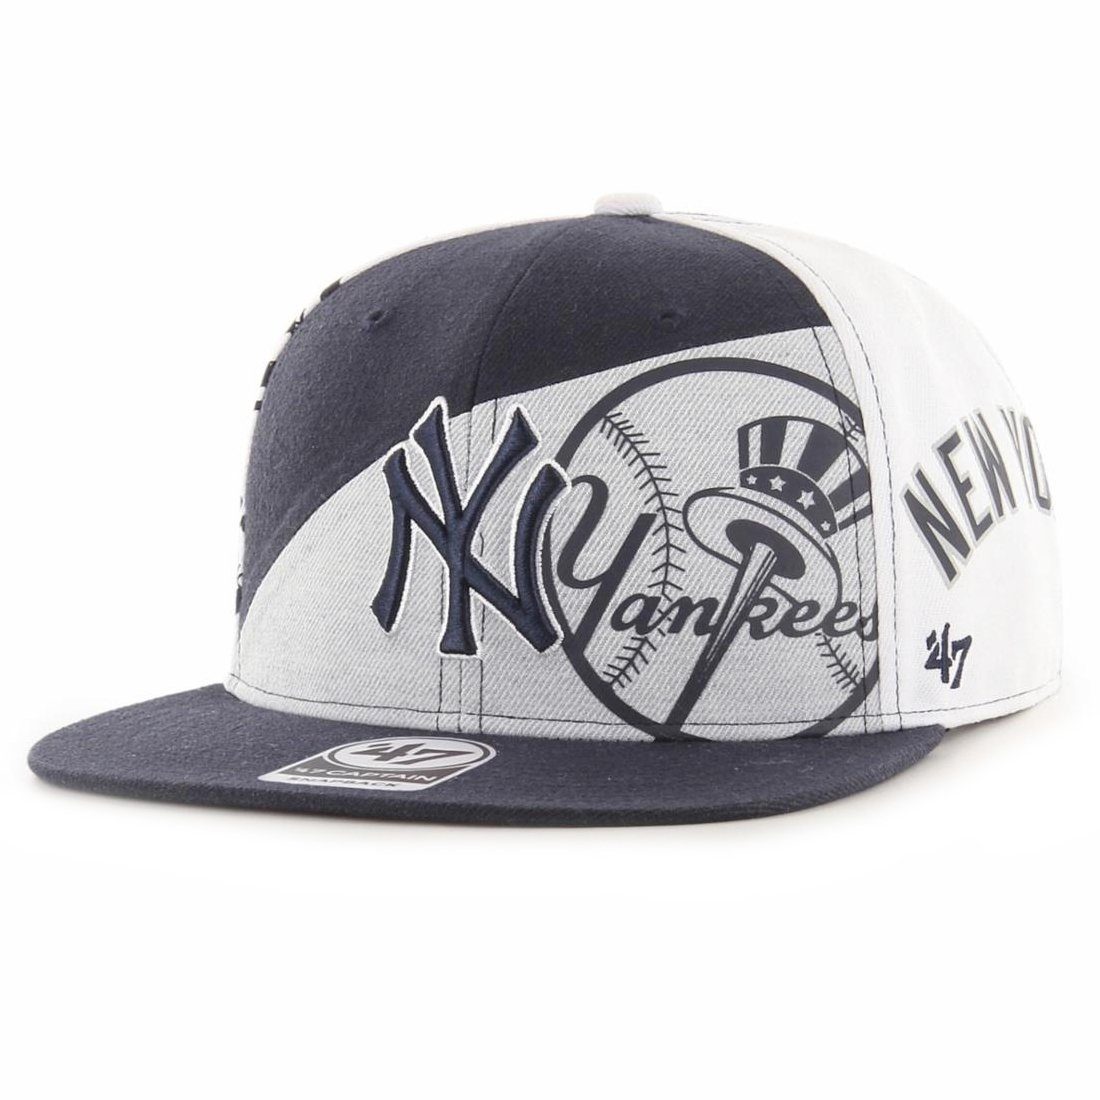 PATCHWORK New Snapback York Cap Yankees Brand '47